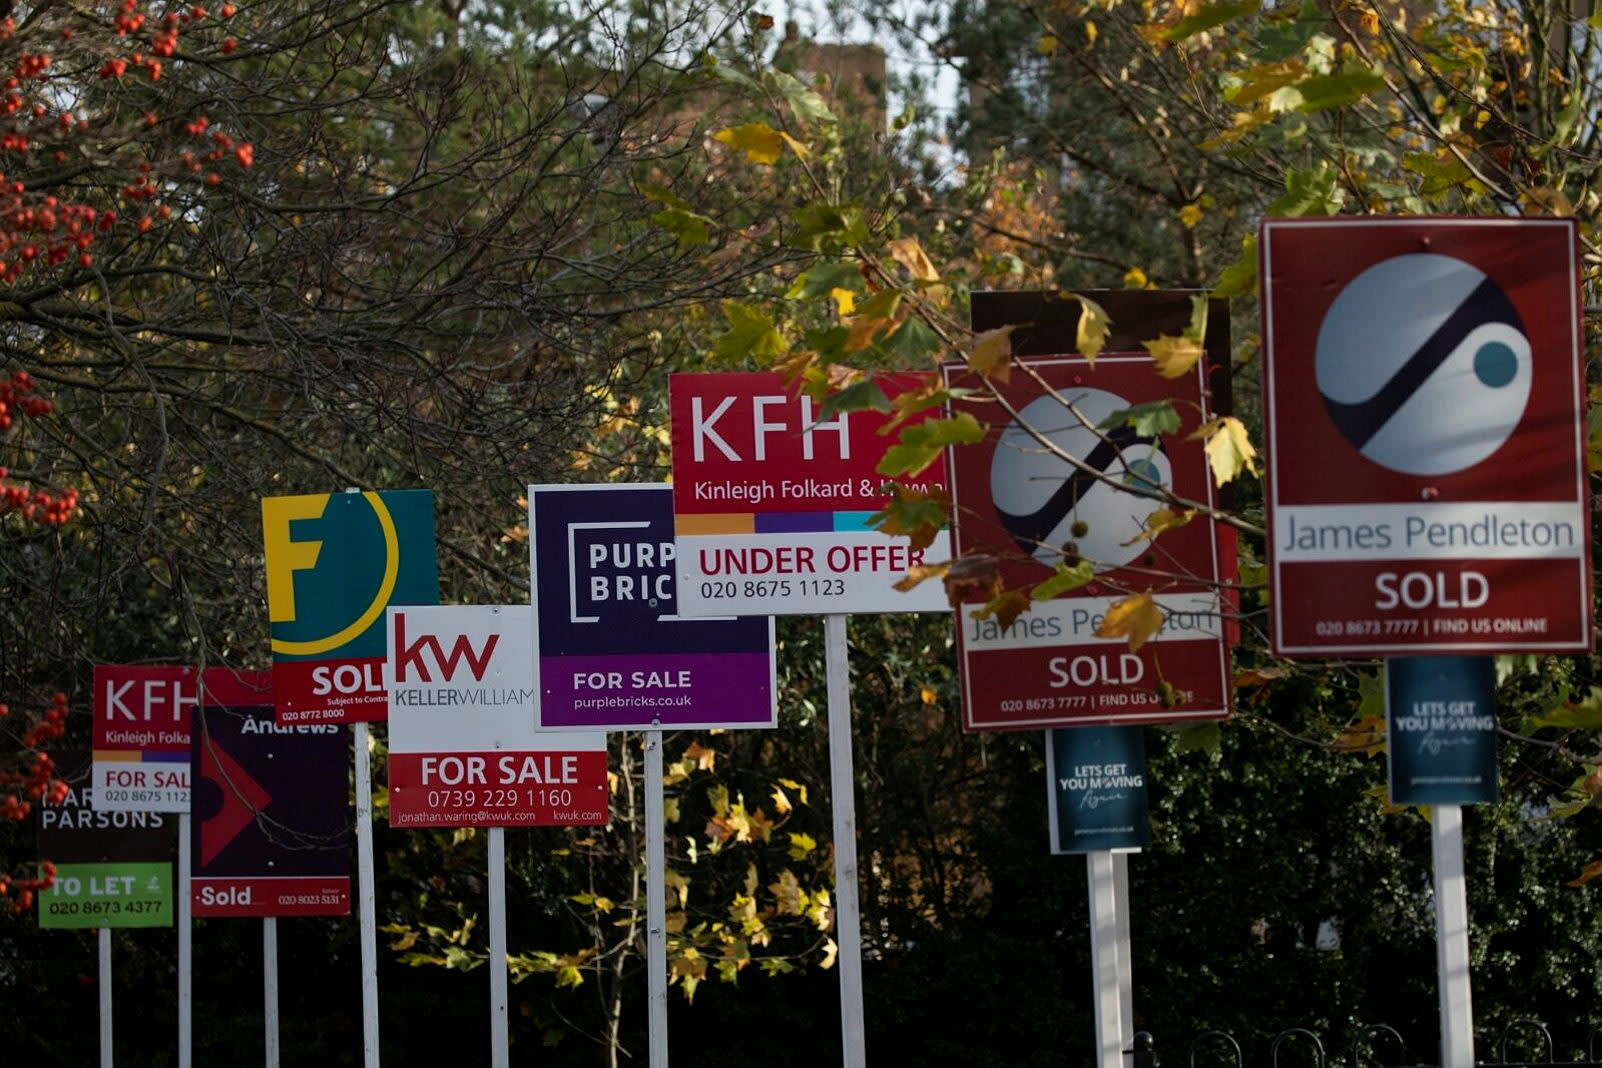 Broker calls for better regulation of estate agents amid buying struggle